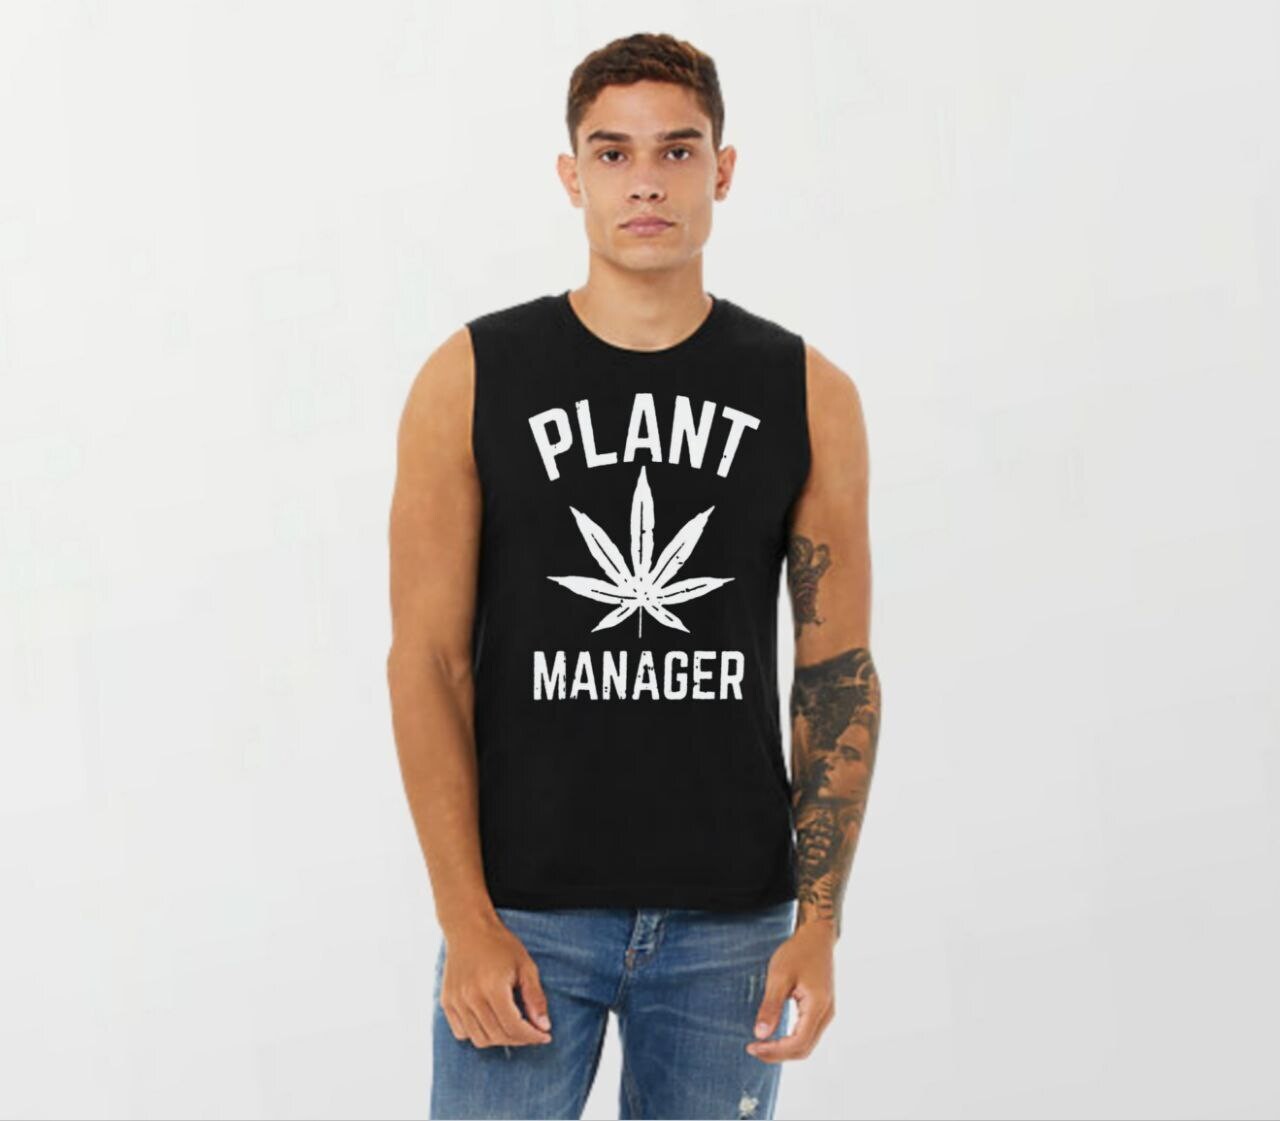 Plant manager_Elite Sleeveless Tee black